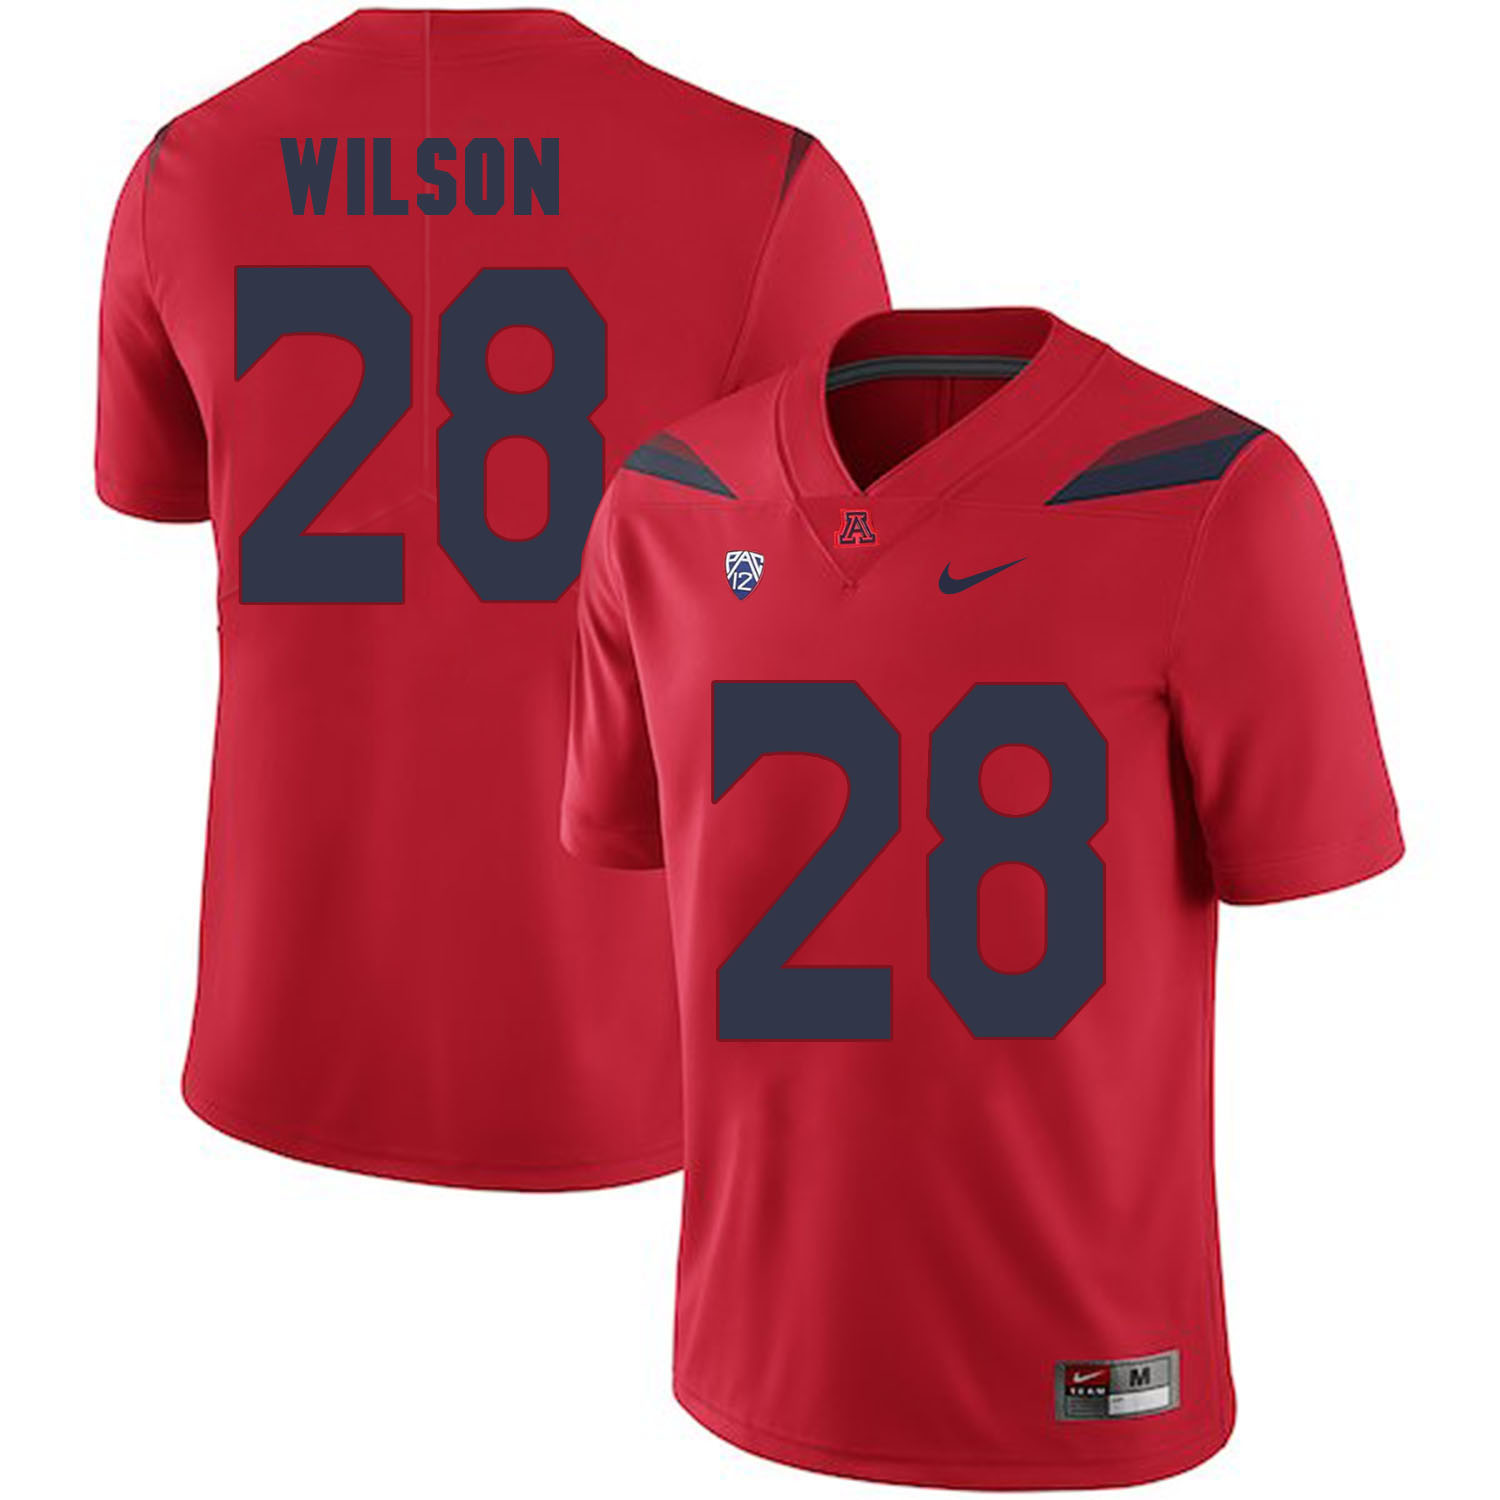 Arizona Wildcats 28 Nick Wilson Red College Football Jersey